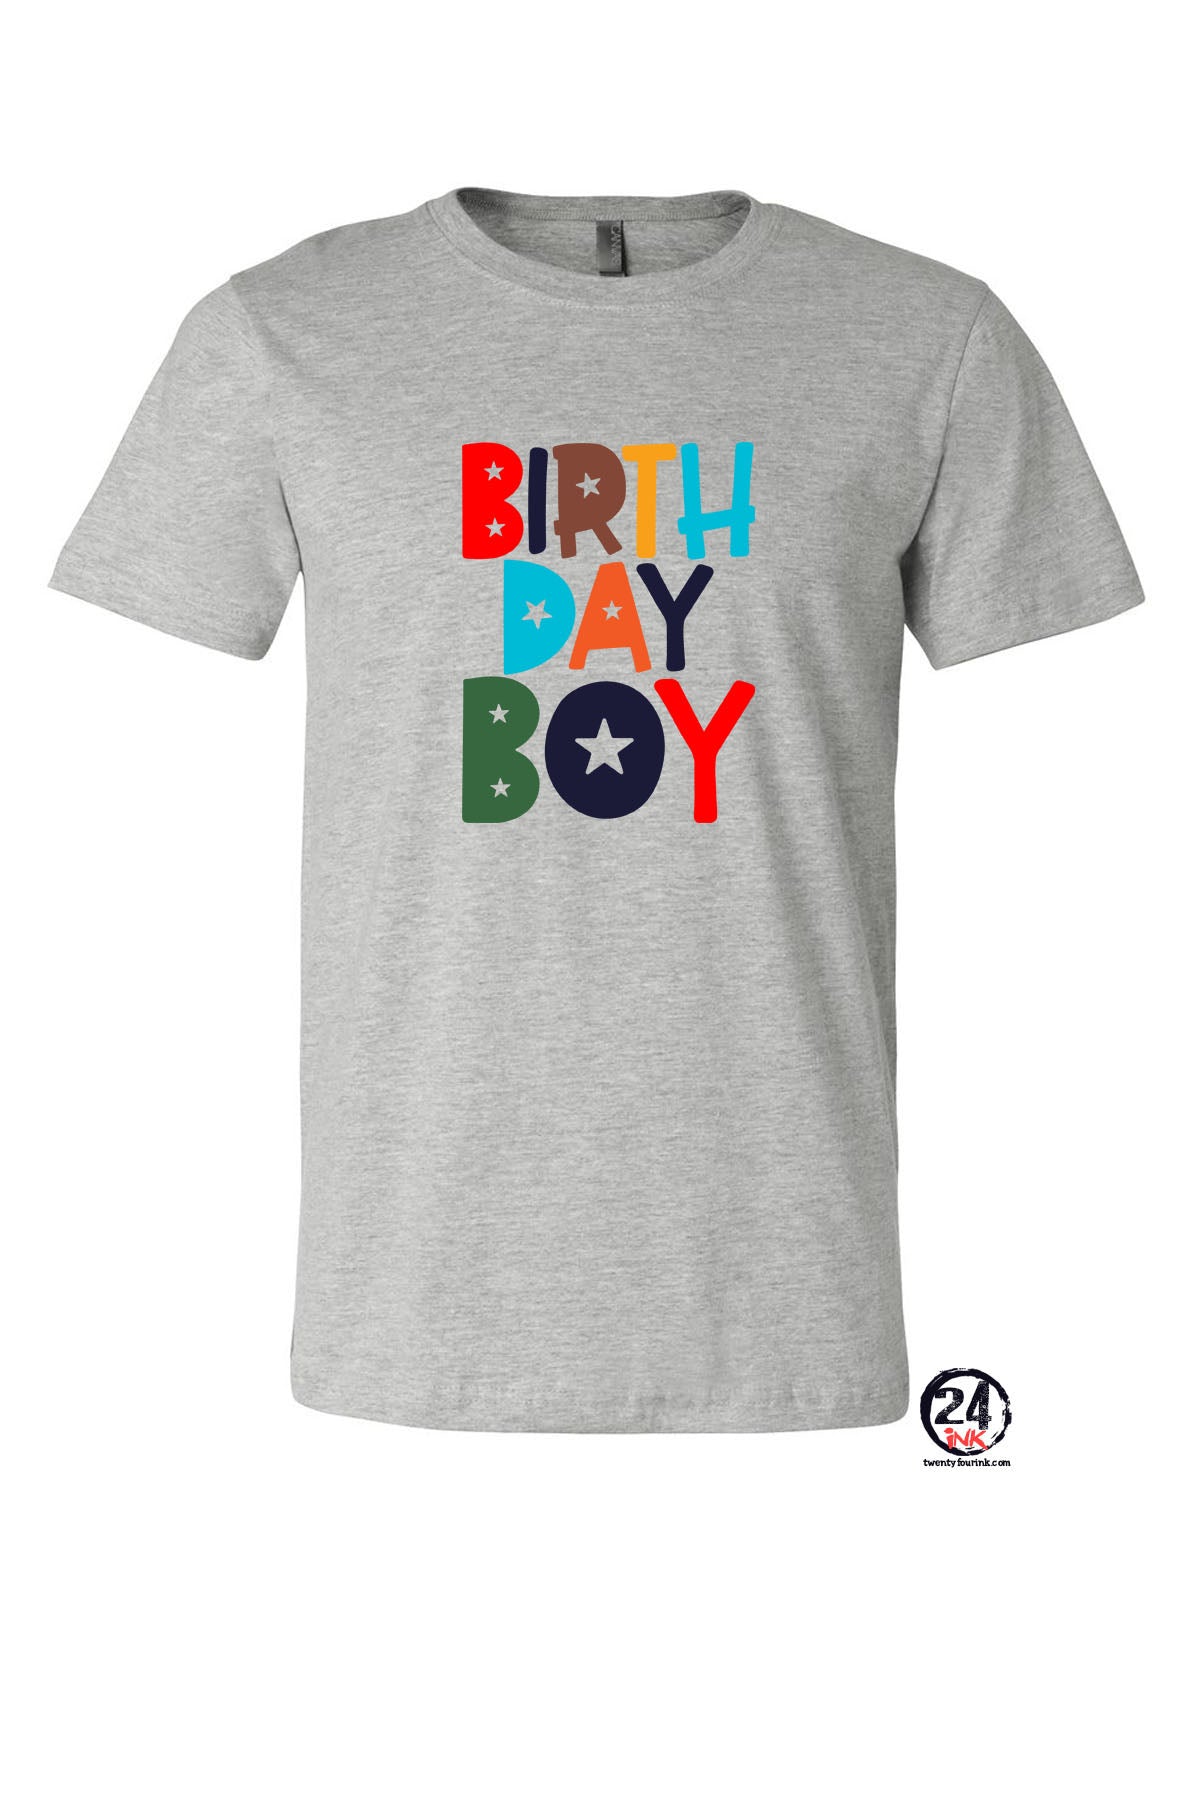 Birthday Boy t-Shirt